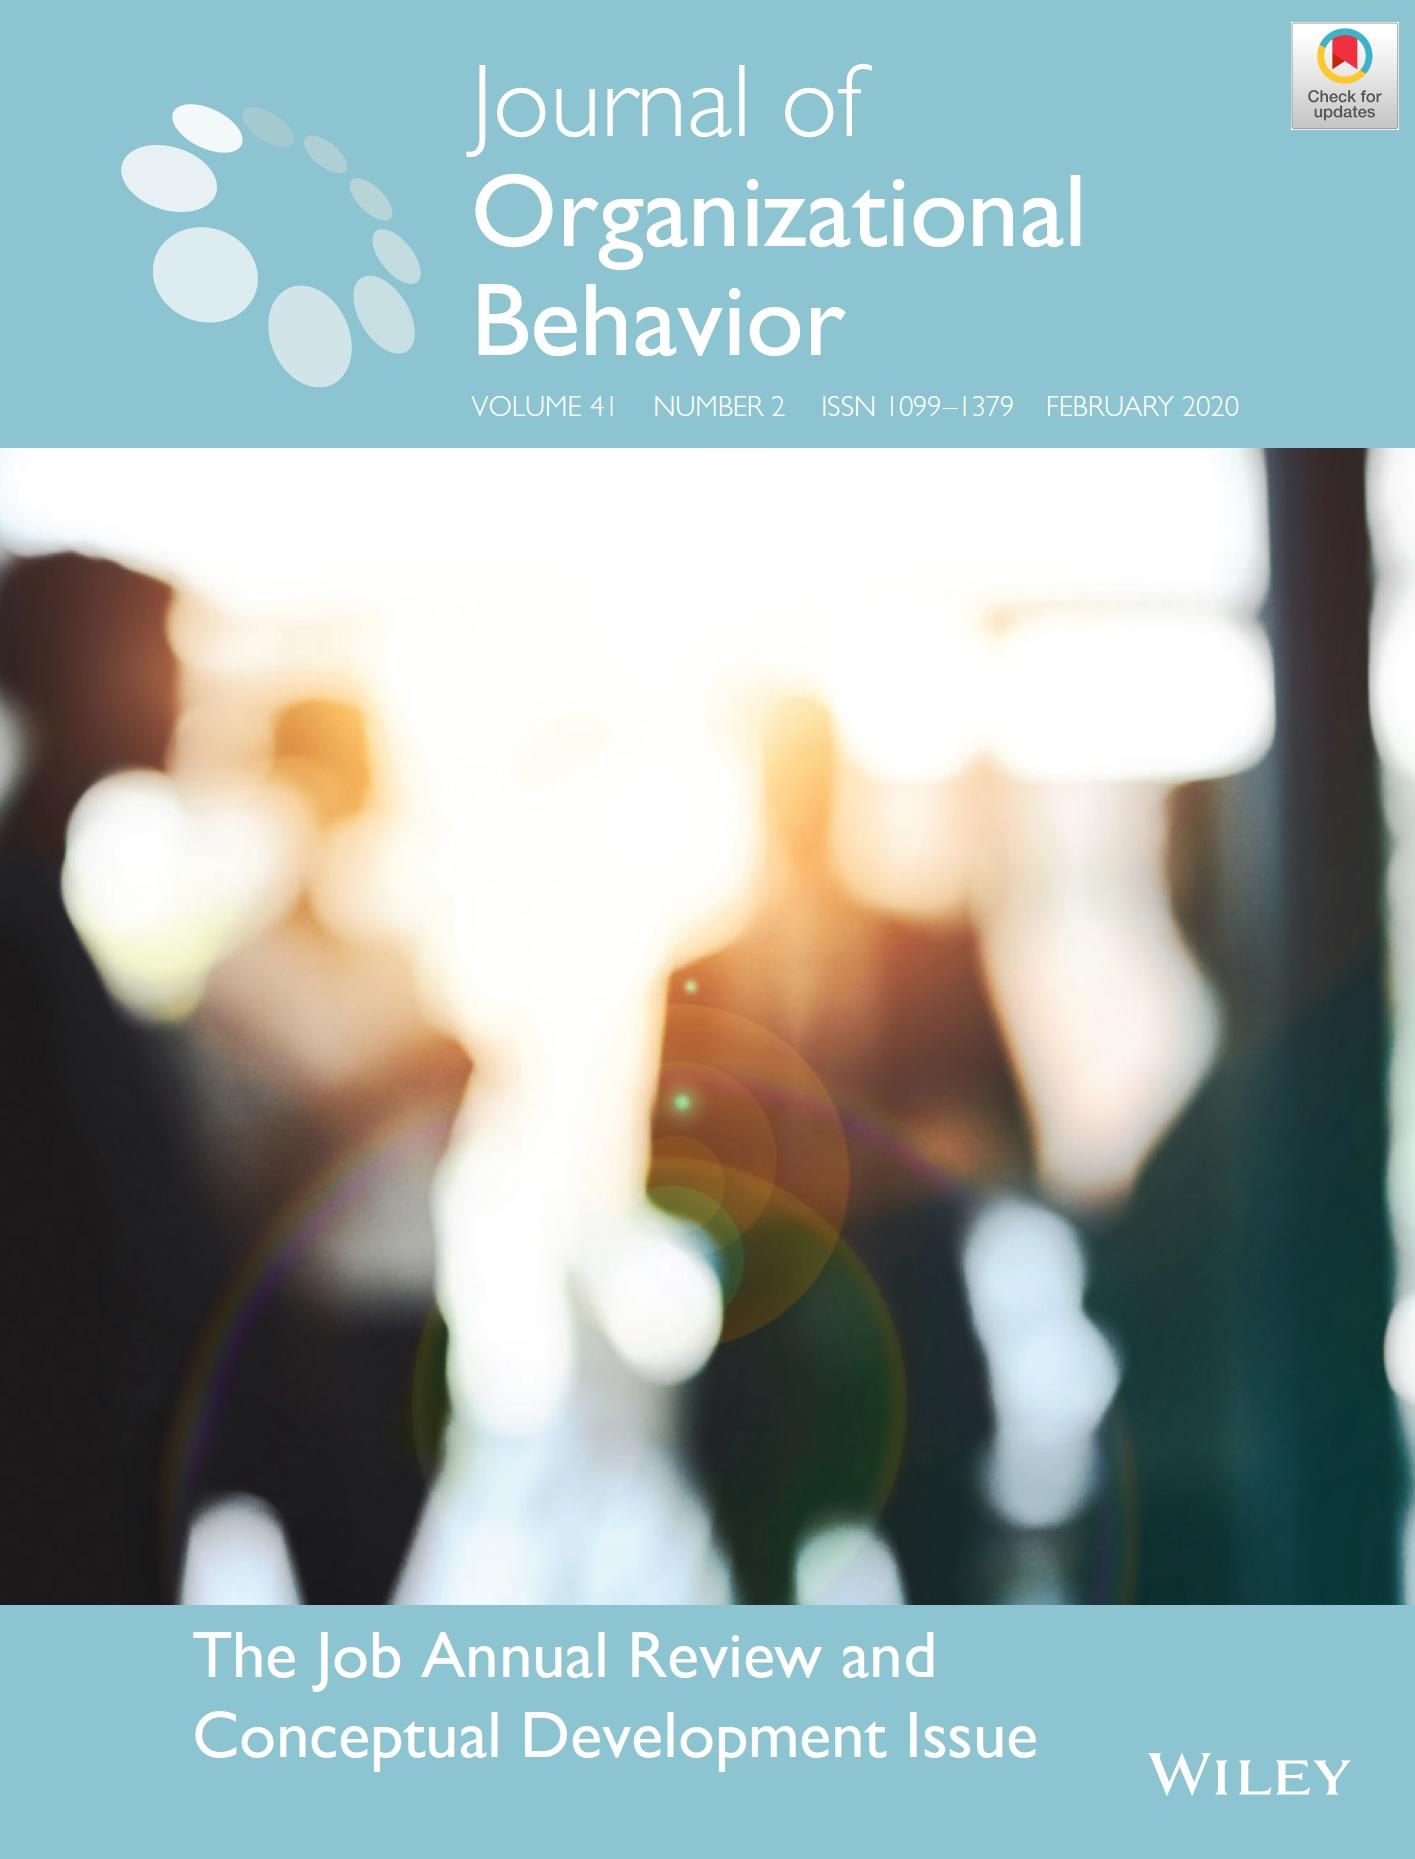 Journal of Organizational Behavior